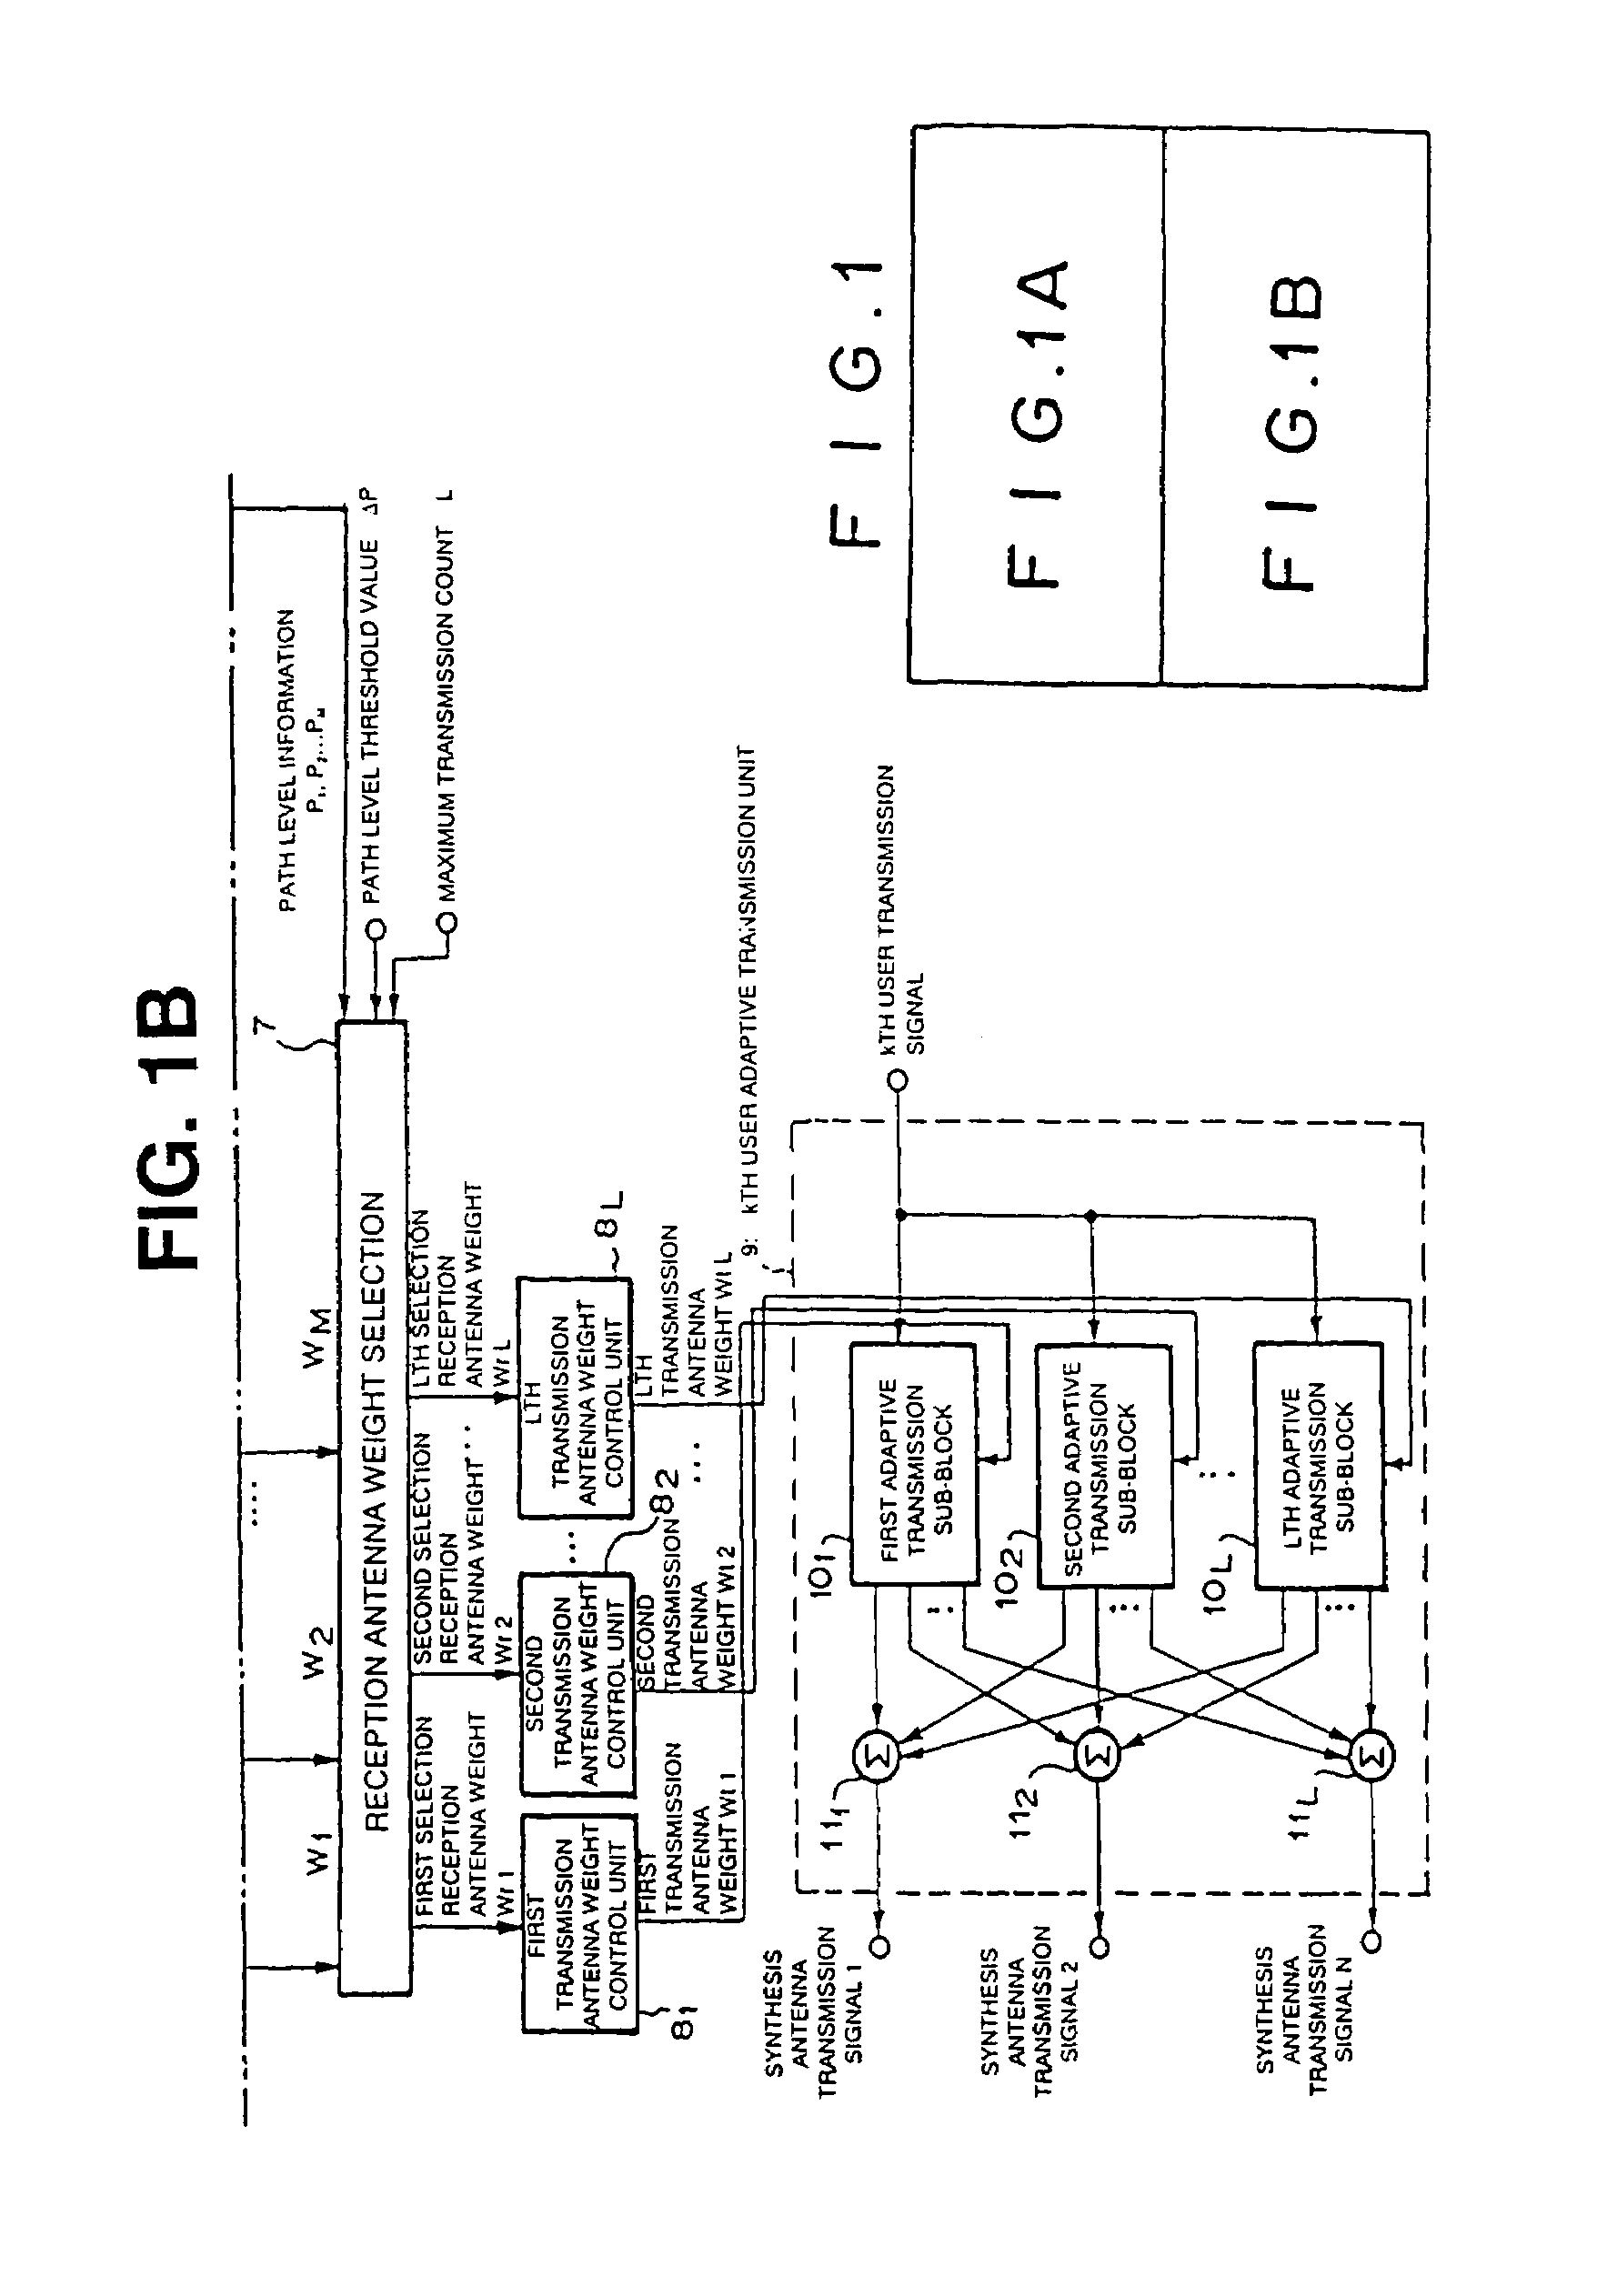 Adaptive transmitter/receiver